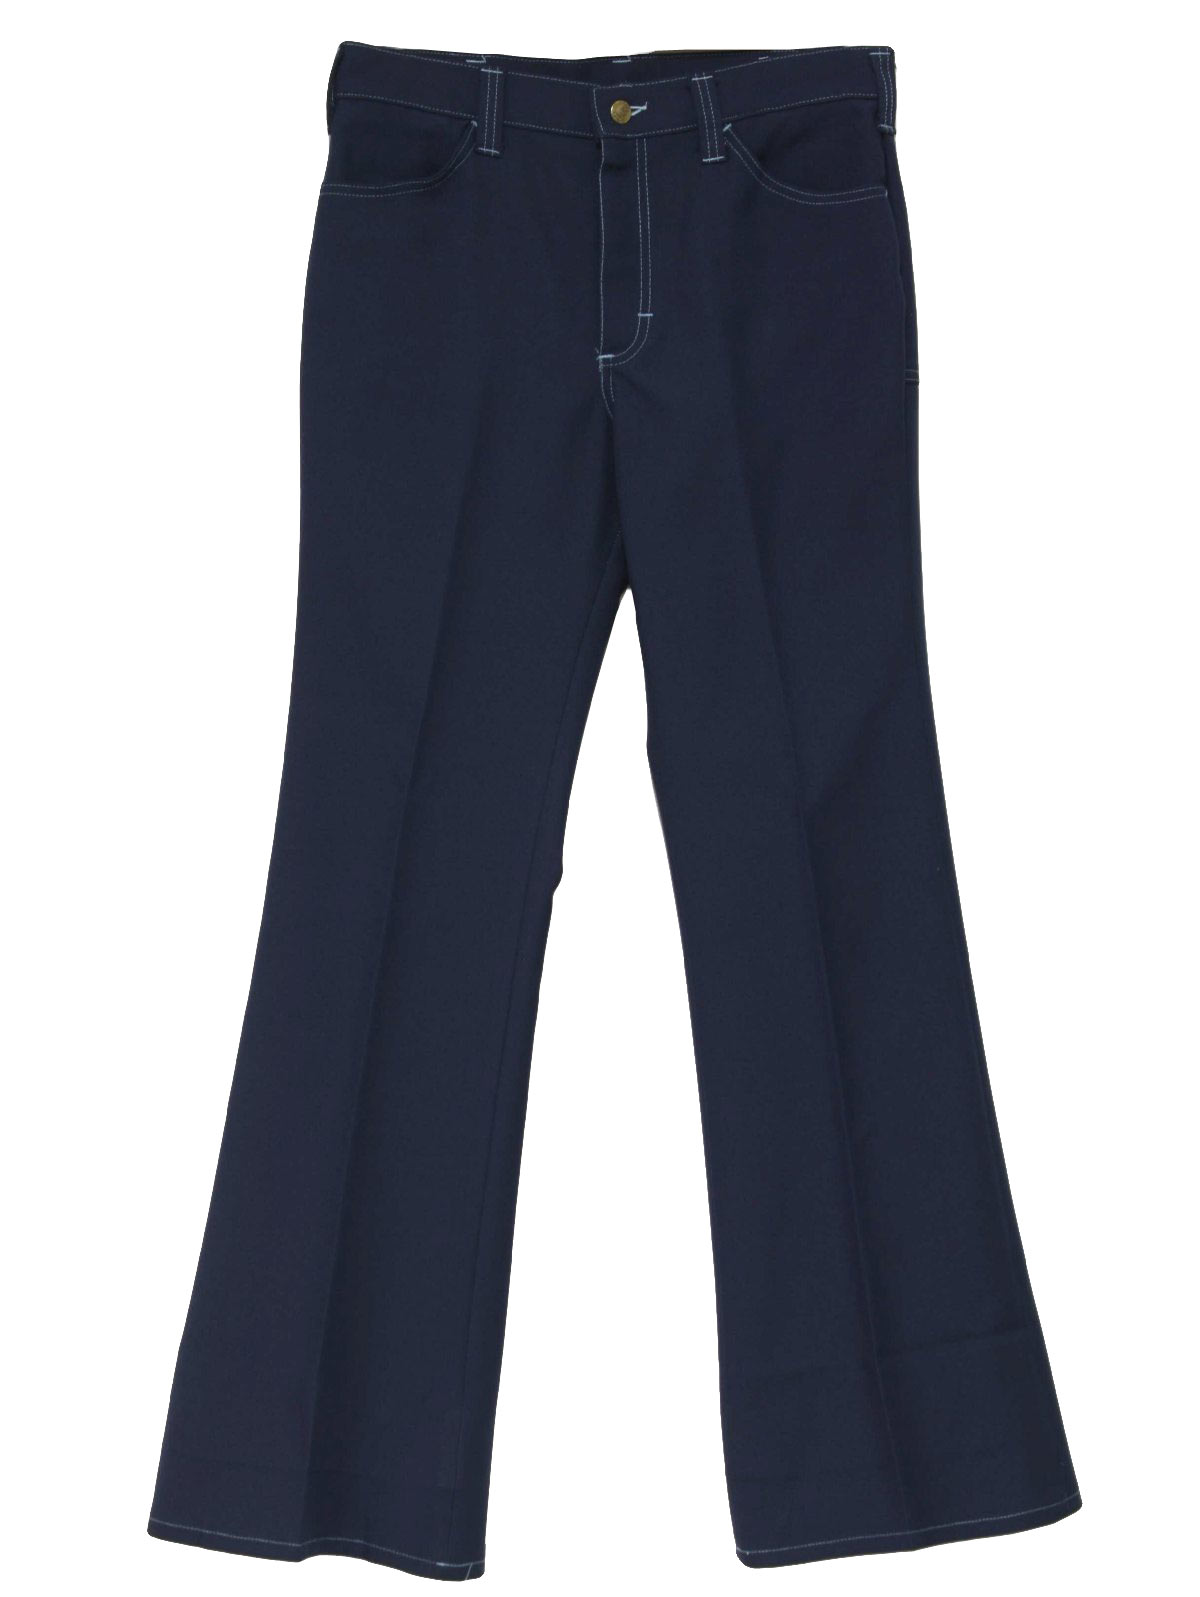 Retro 70s Bellbottom Pants (Lee) : 70s -Lee- Mens navy blue polyester ...